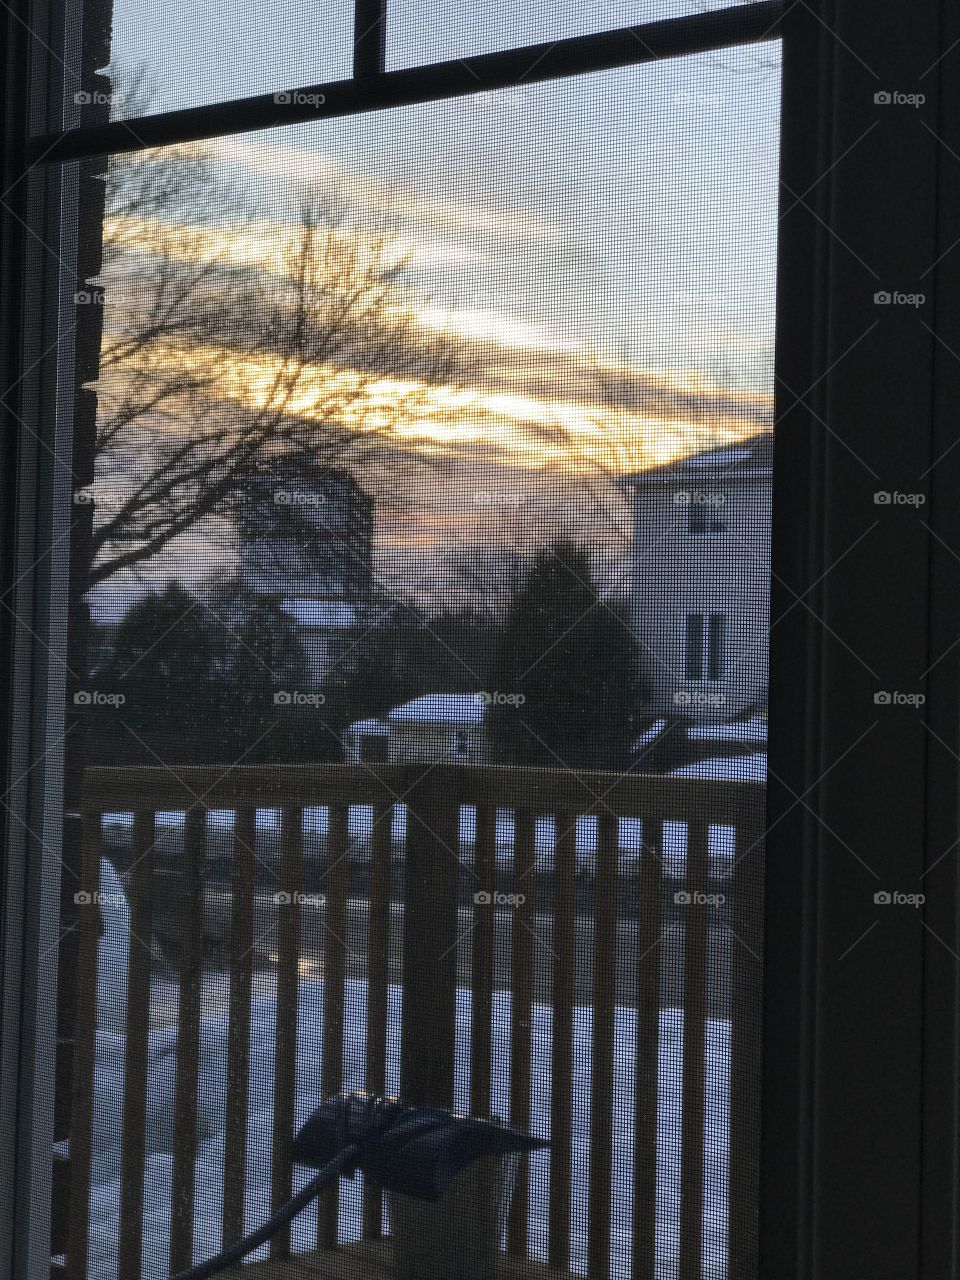 Looking outside 